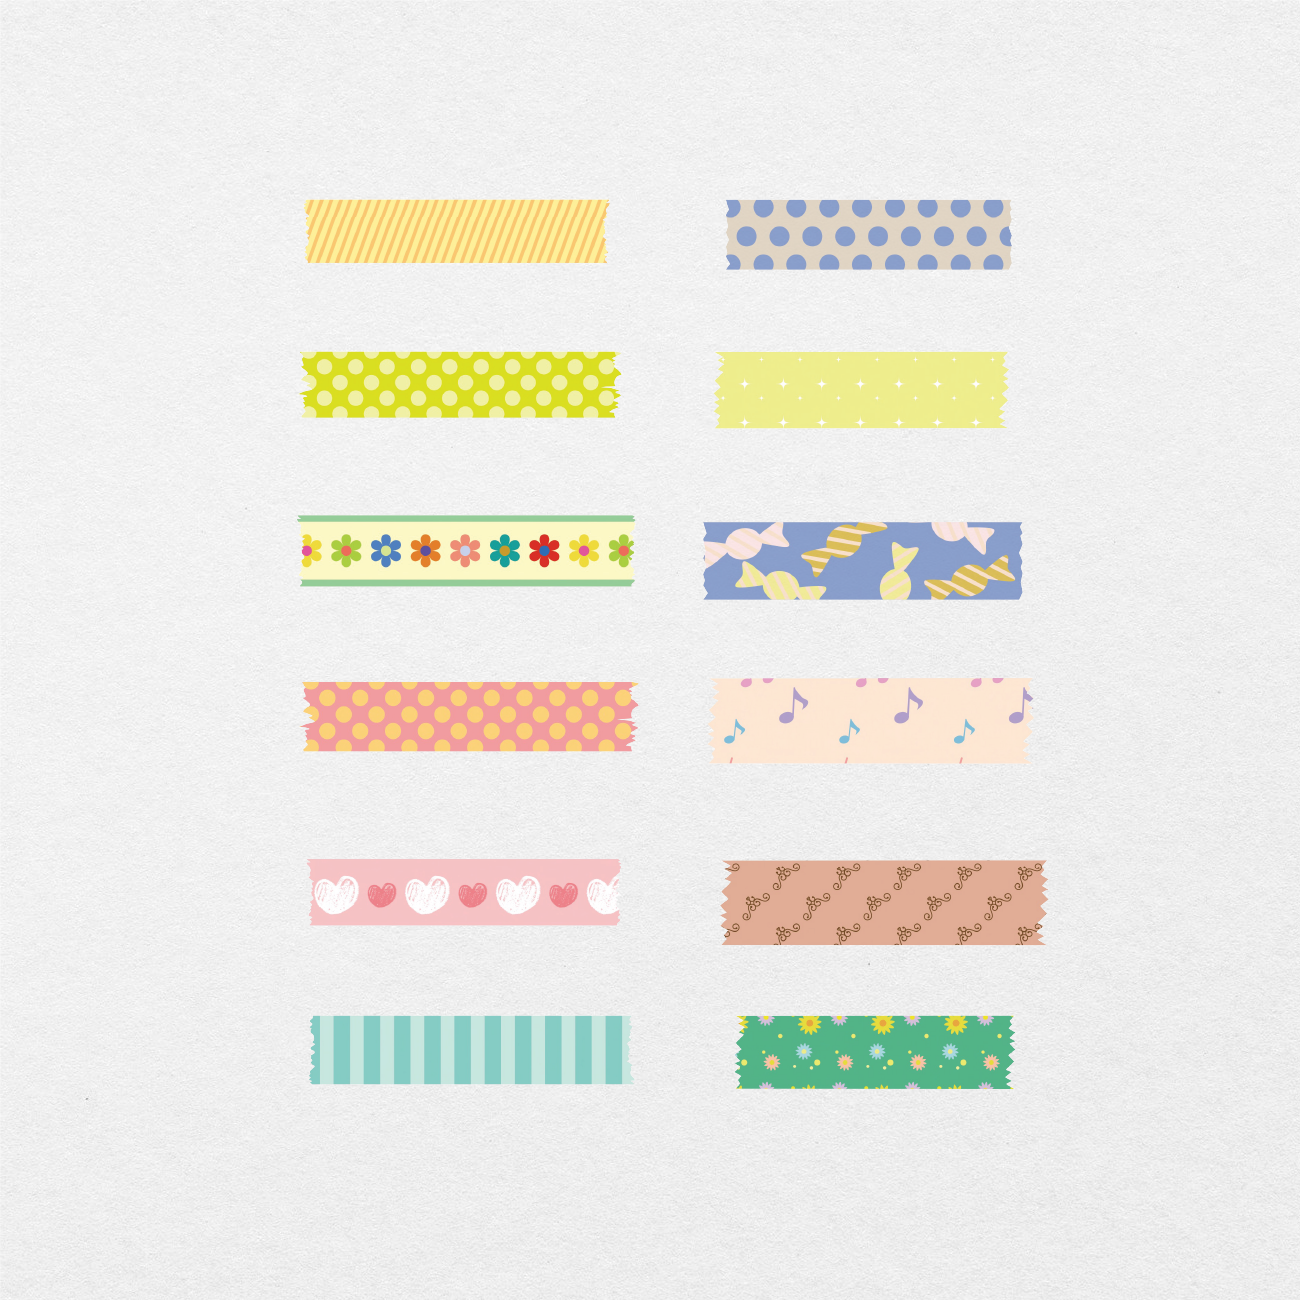 120 Digital Washi Tapes Sticker Bundle — Stationery Pal